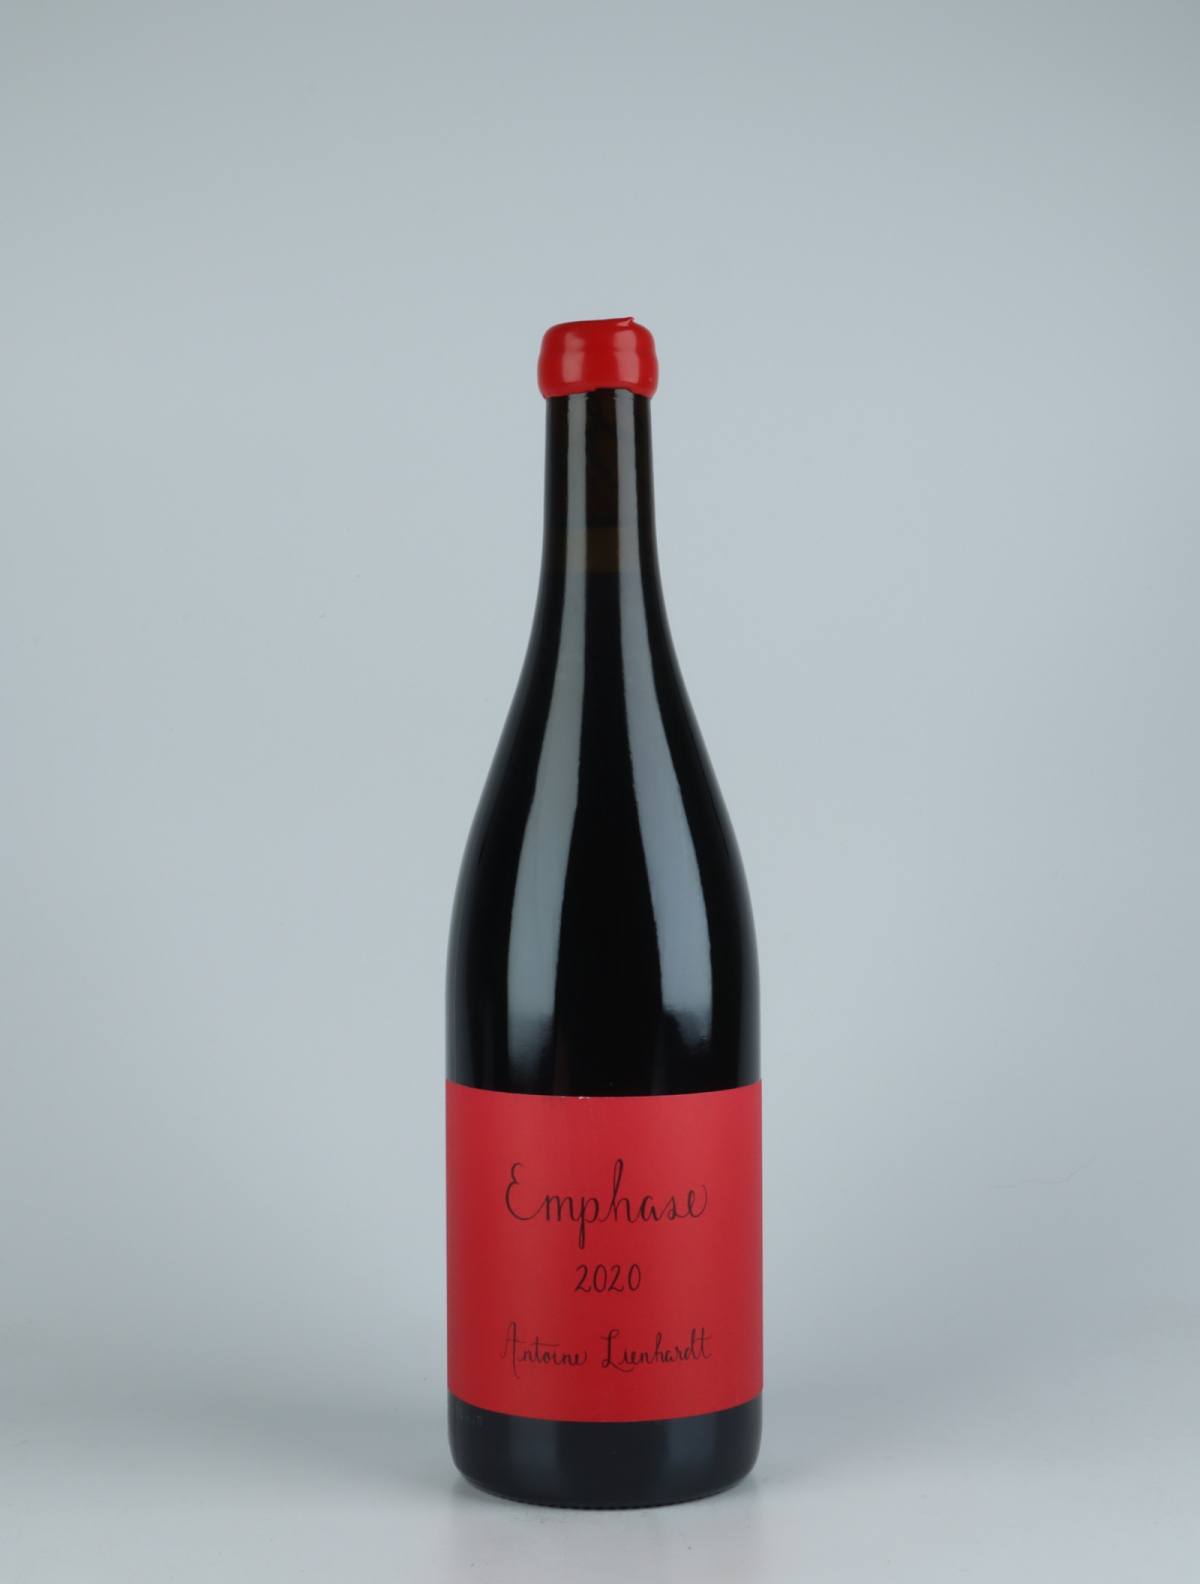 A bottle 2020 Côte de Nuits Villages - Emphase Red wine from Antoine Lienhardt, Burgundy in France